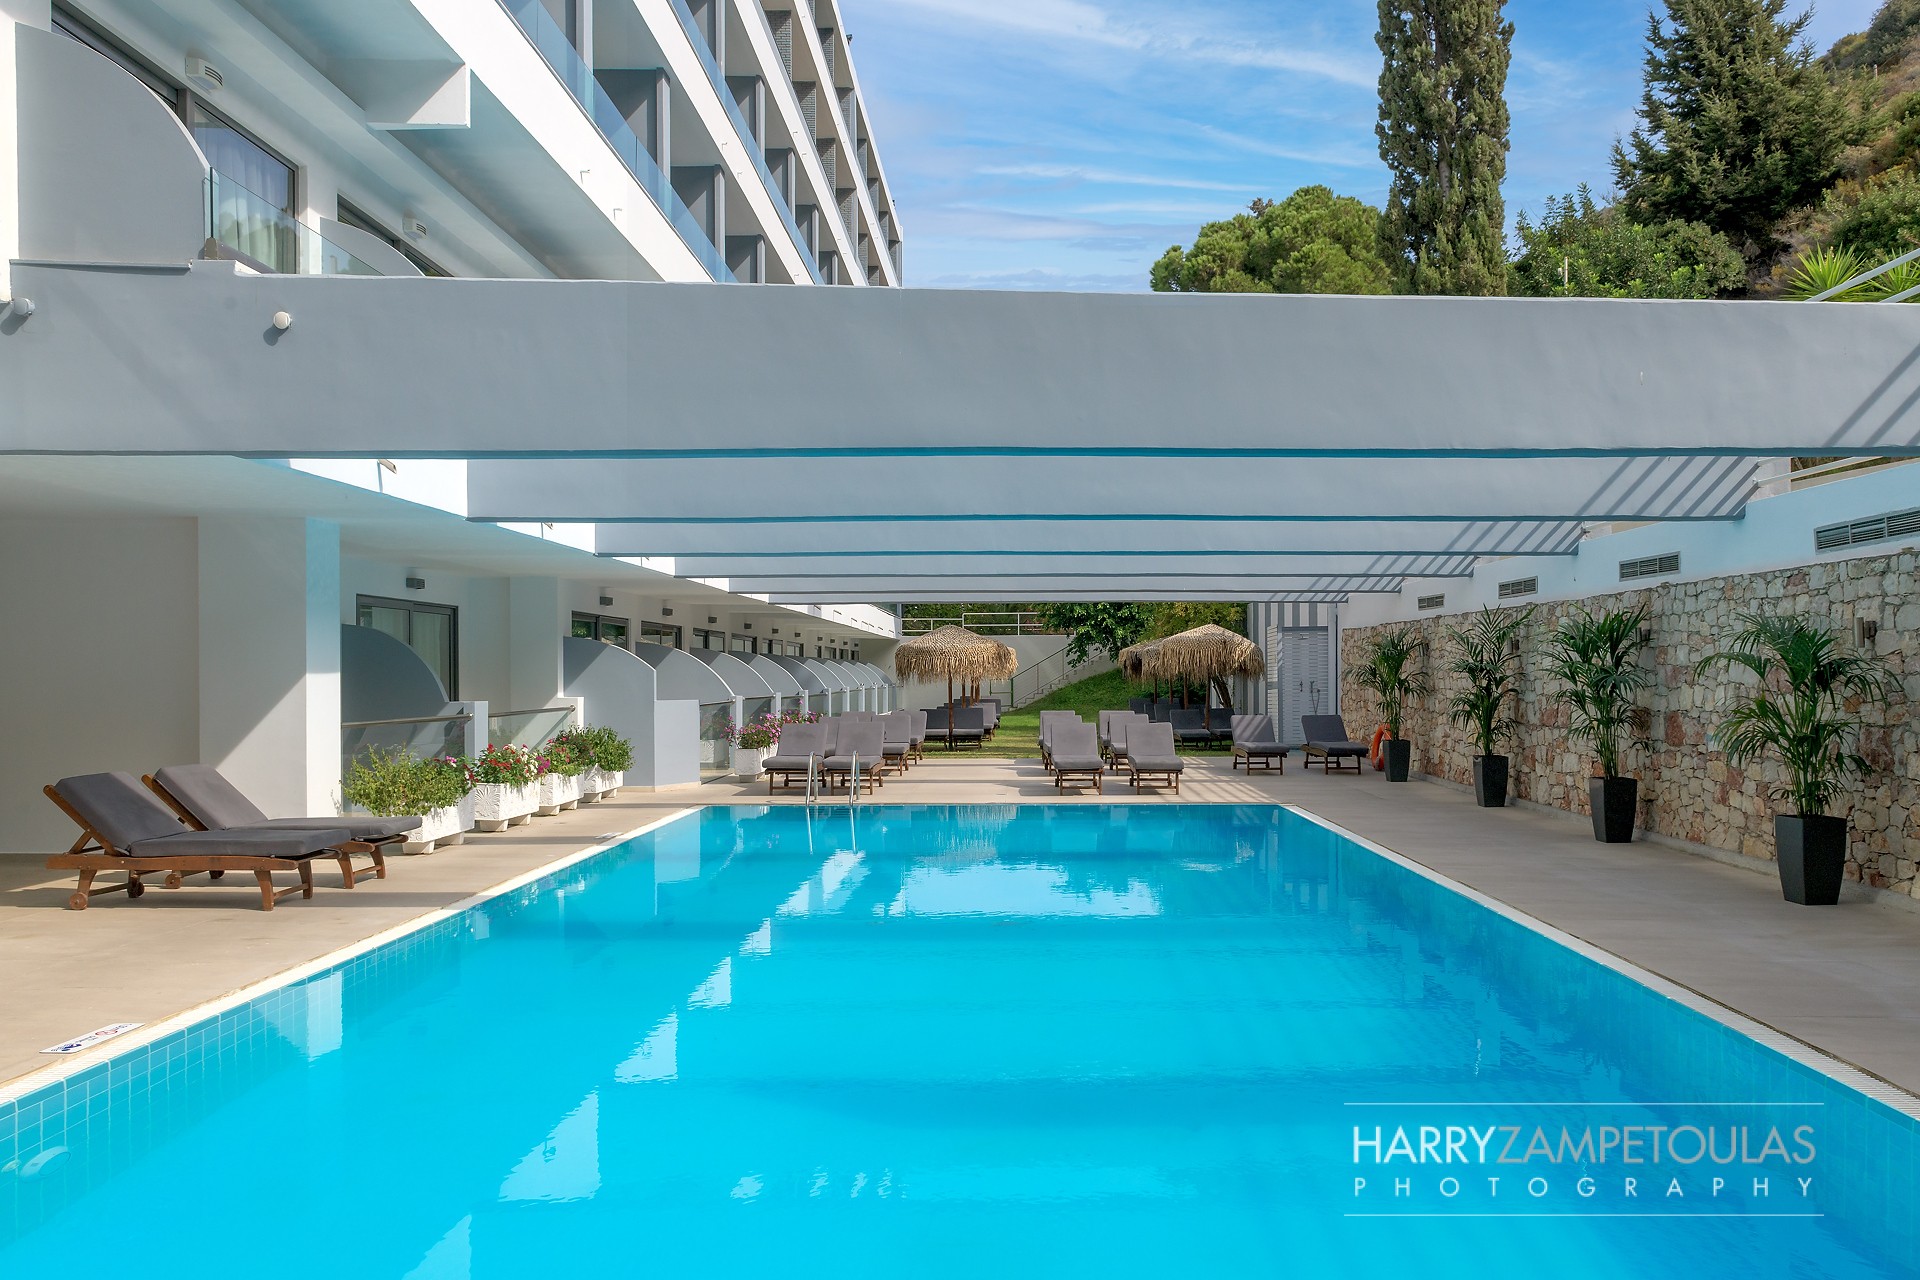 Oceanis-Hotel-Rhodes-Harry-Zampetoulas-Photography-27 Oceanis Hotel Rhodes - Hotel Photography 